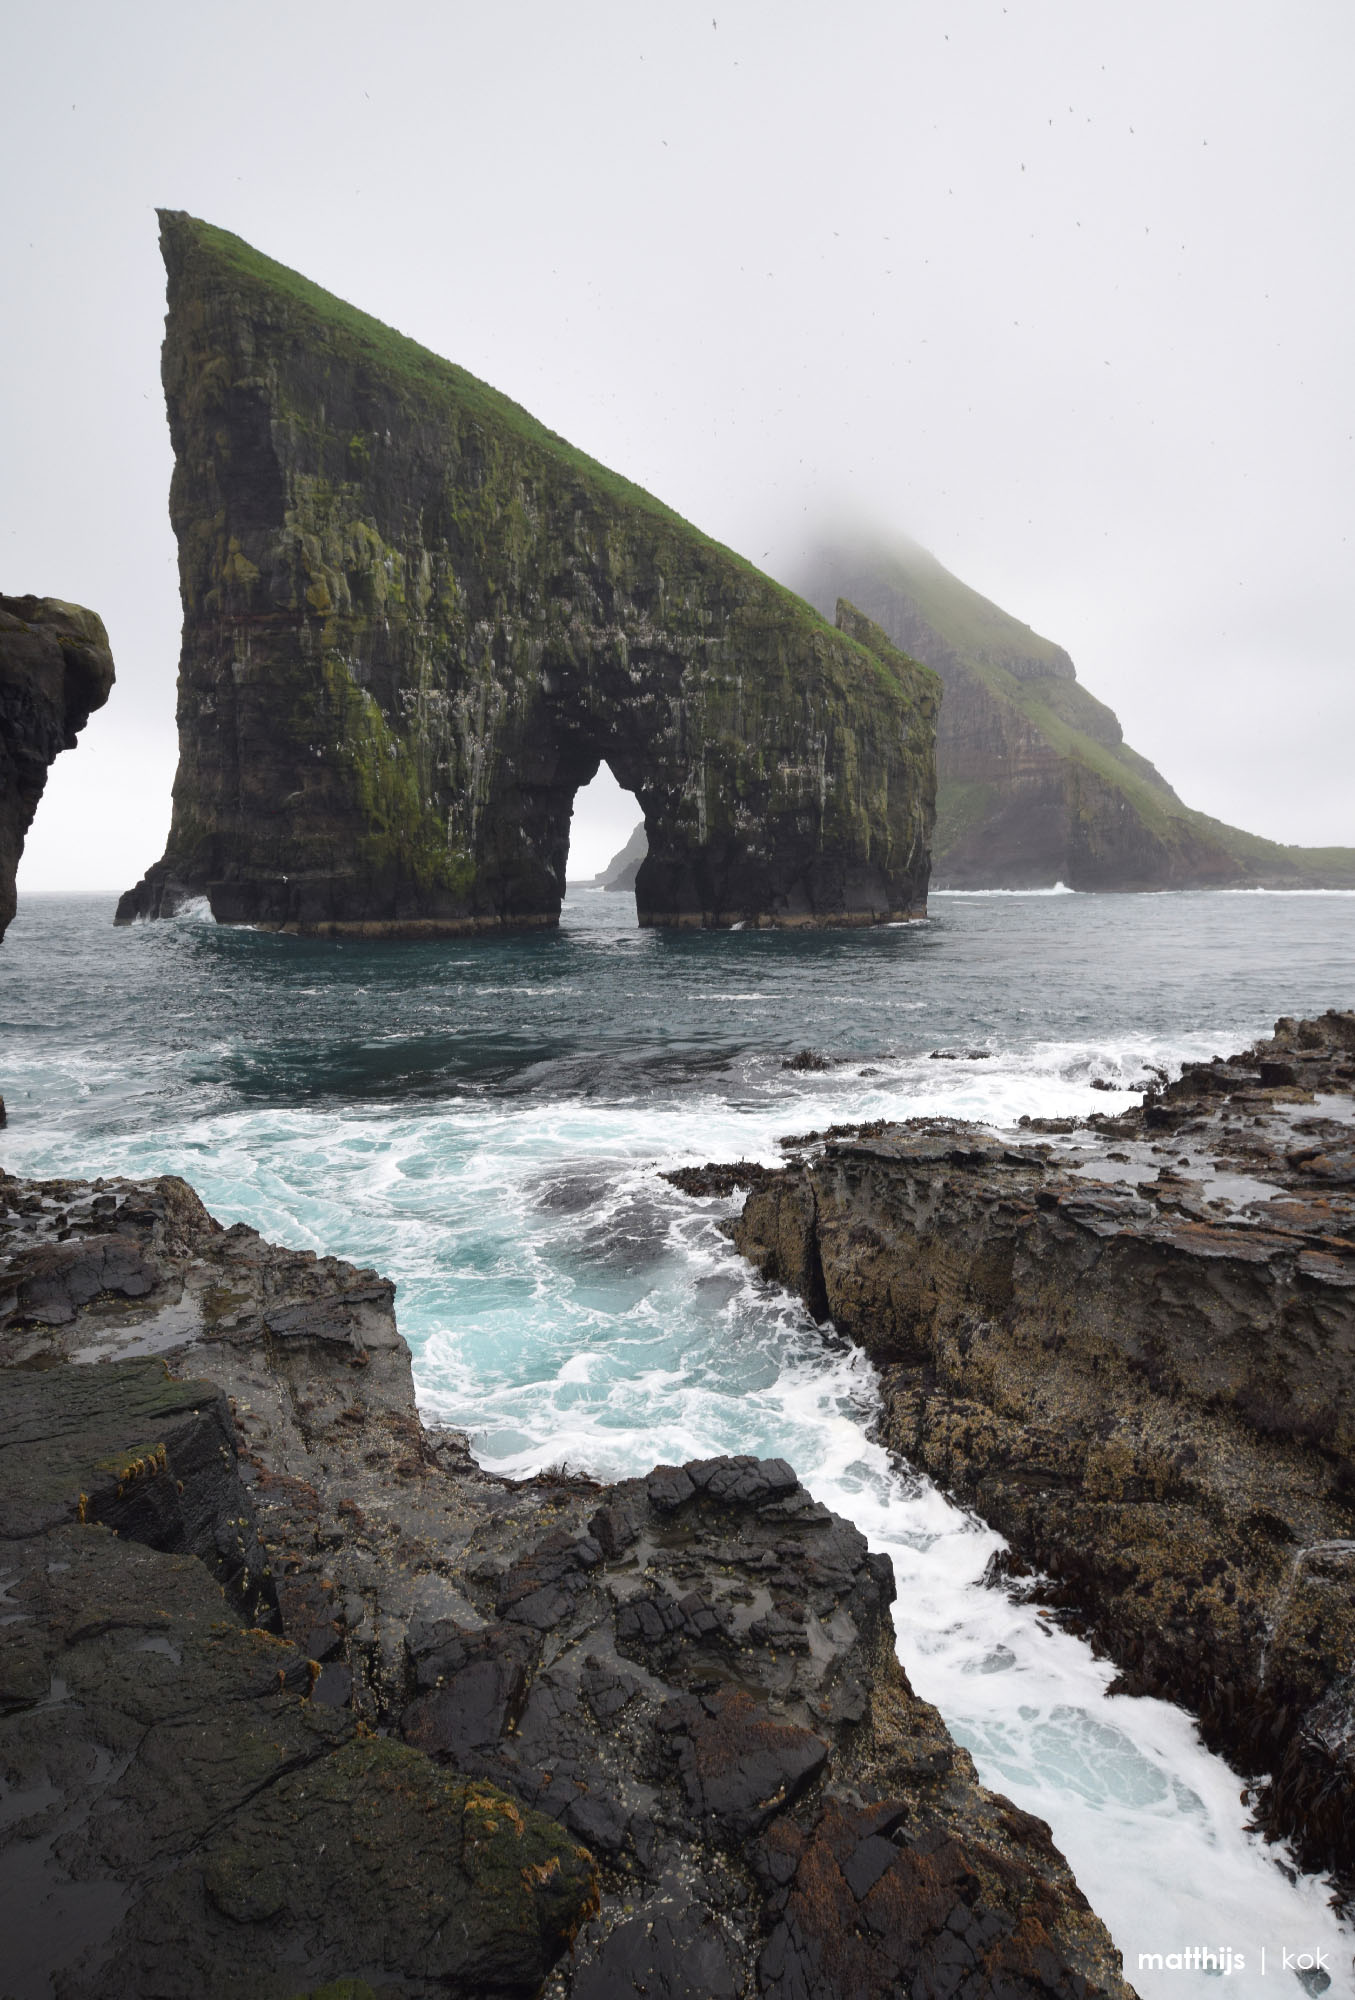 Drangarnir, Faroe Islands | Photo by Matthijs Kok